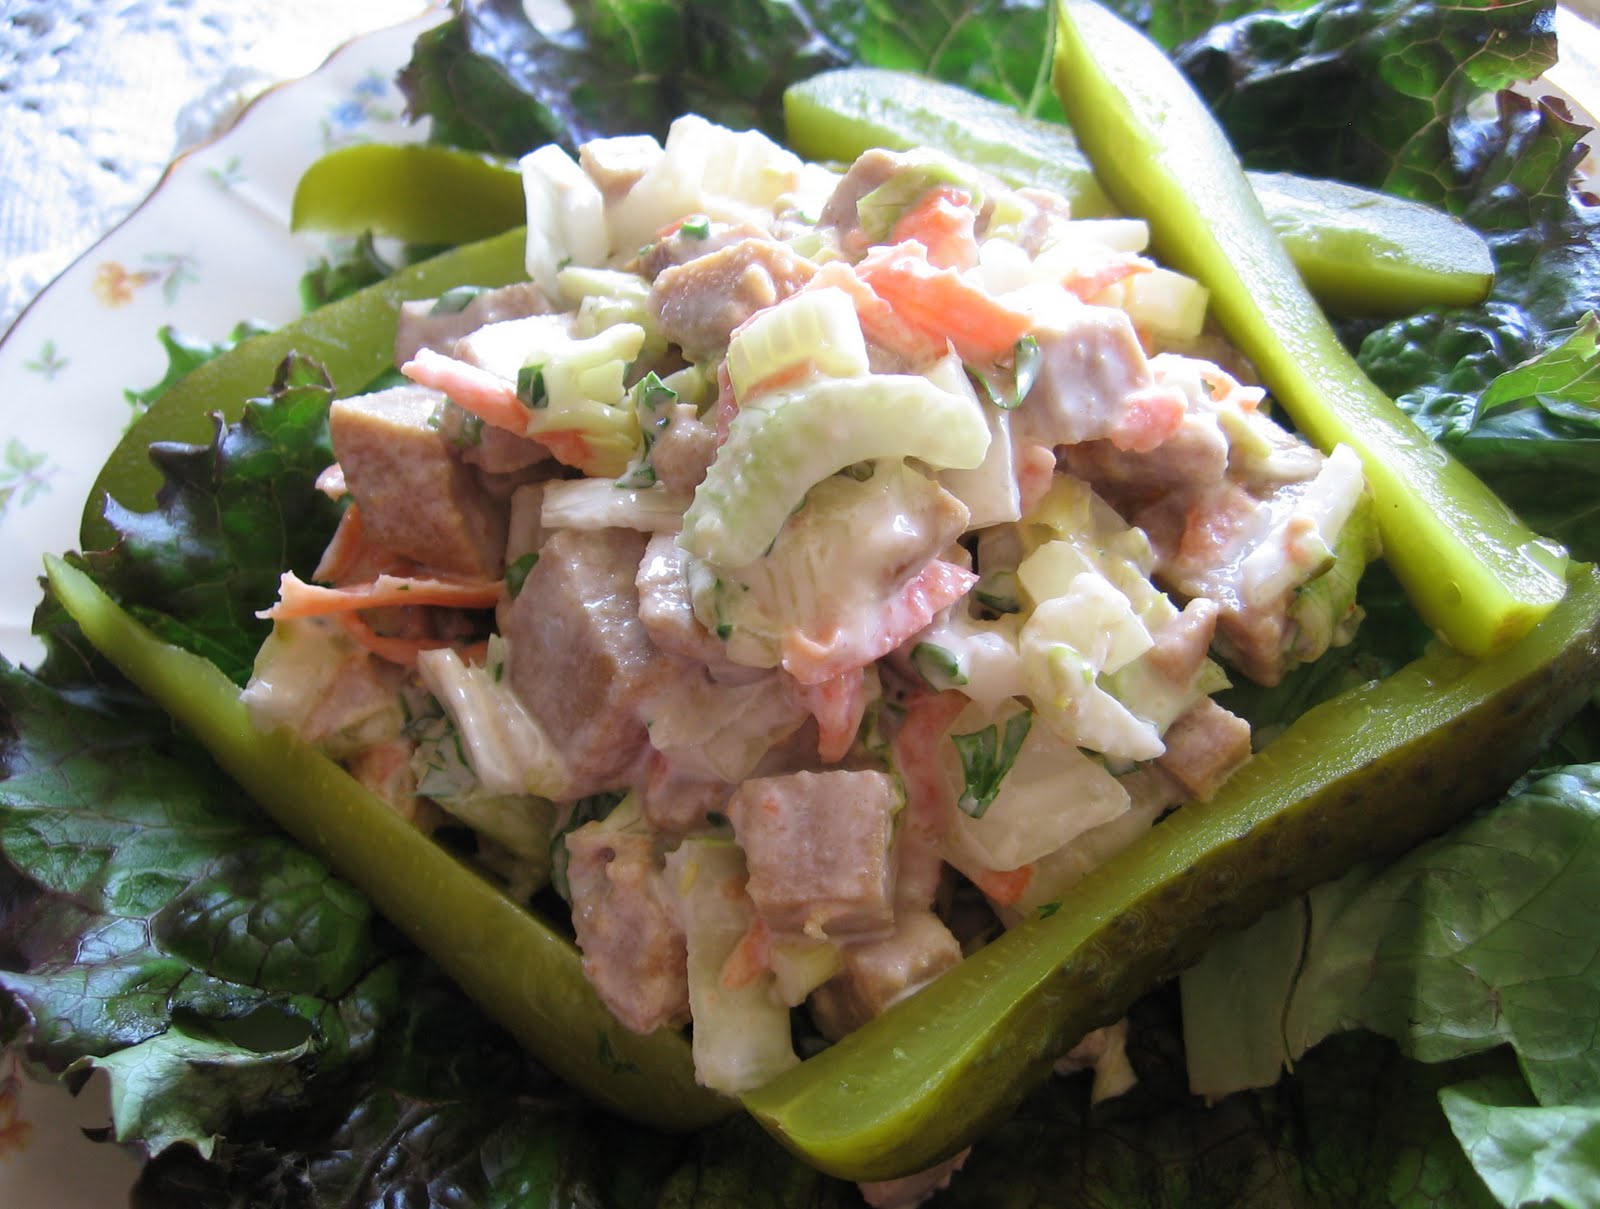 Proteinut Salad